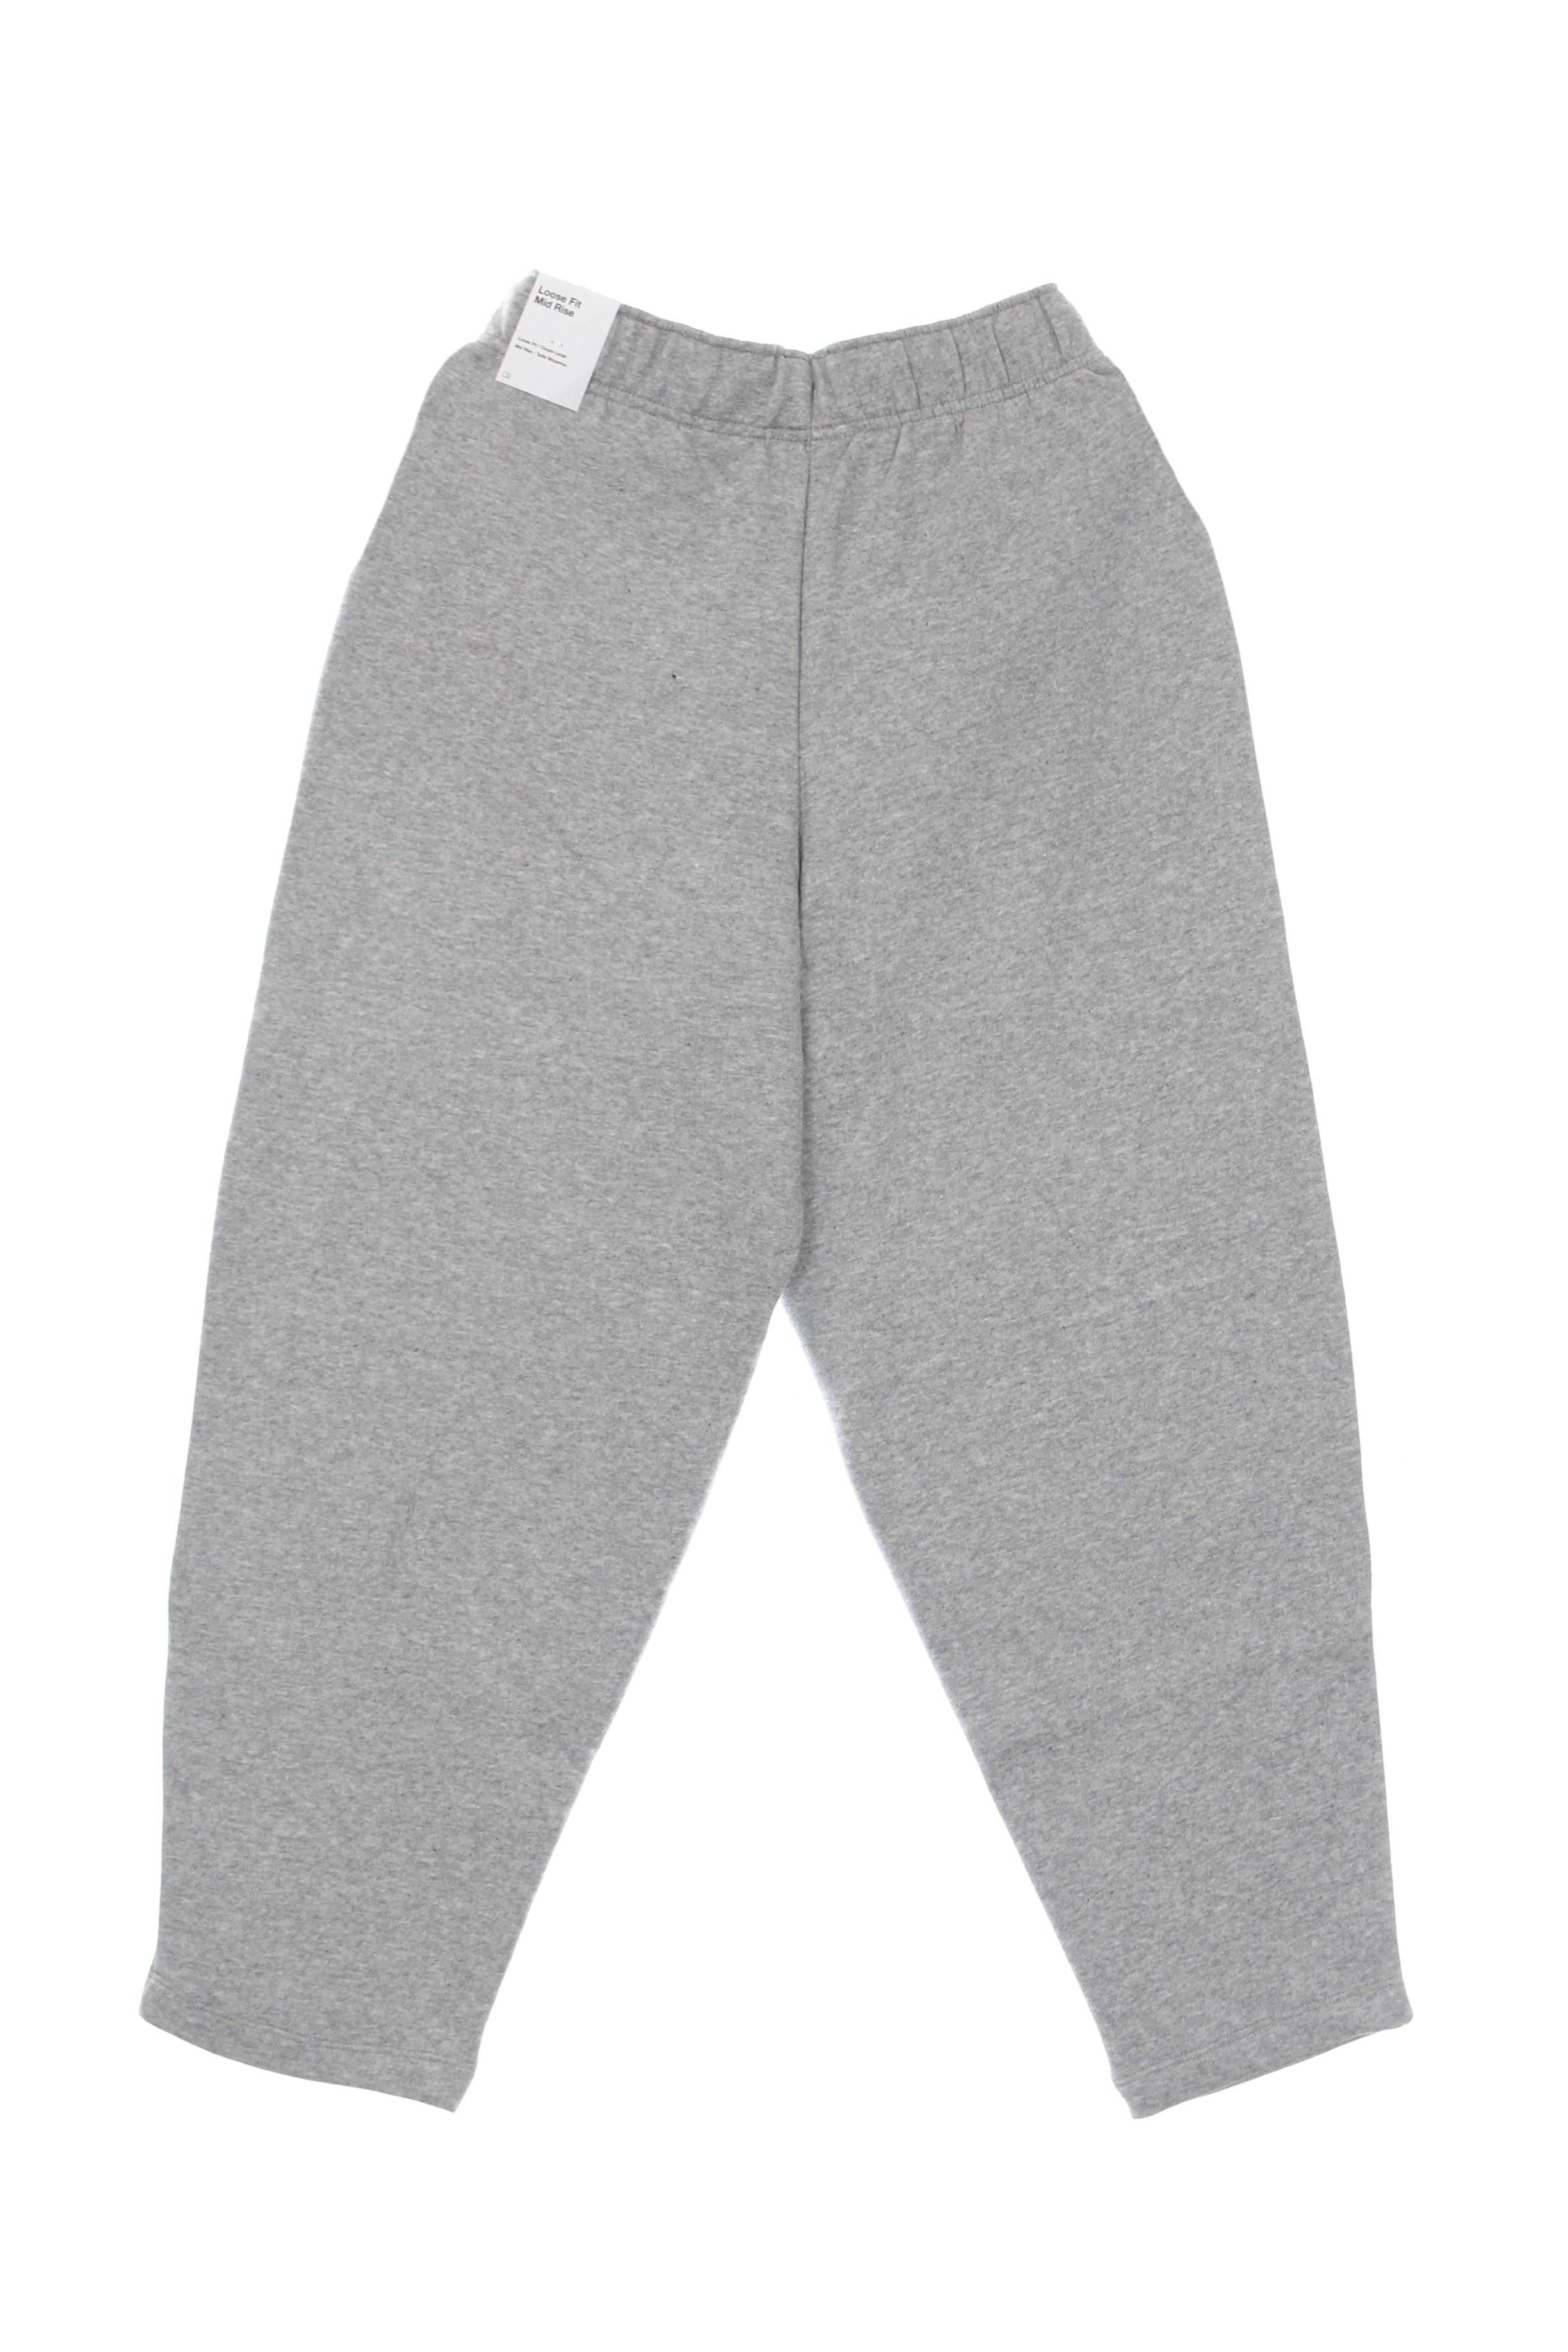 Nike, Pantalone Tuta Felpato Donna W Essentials Collection Fleece Curve Pants, Dk Grey Heather/white